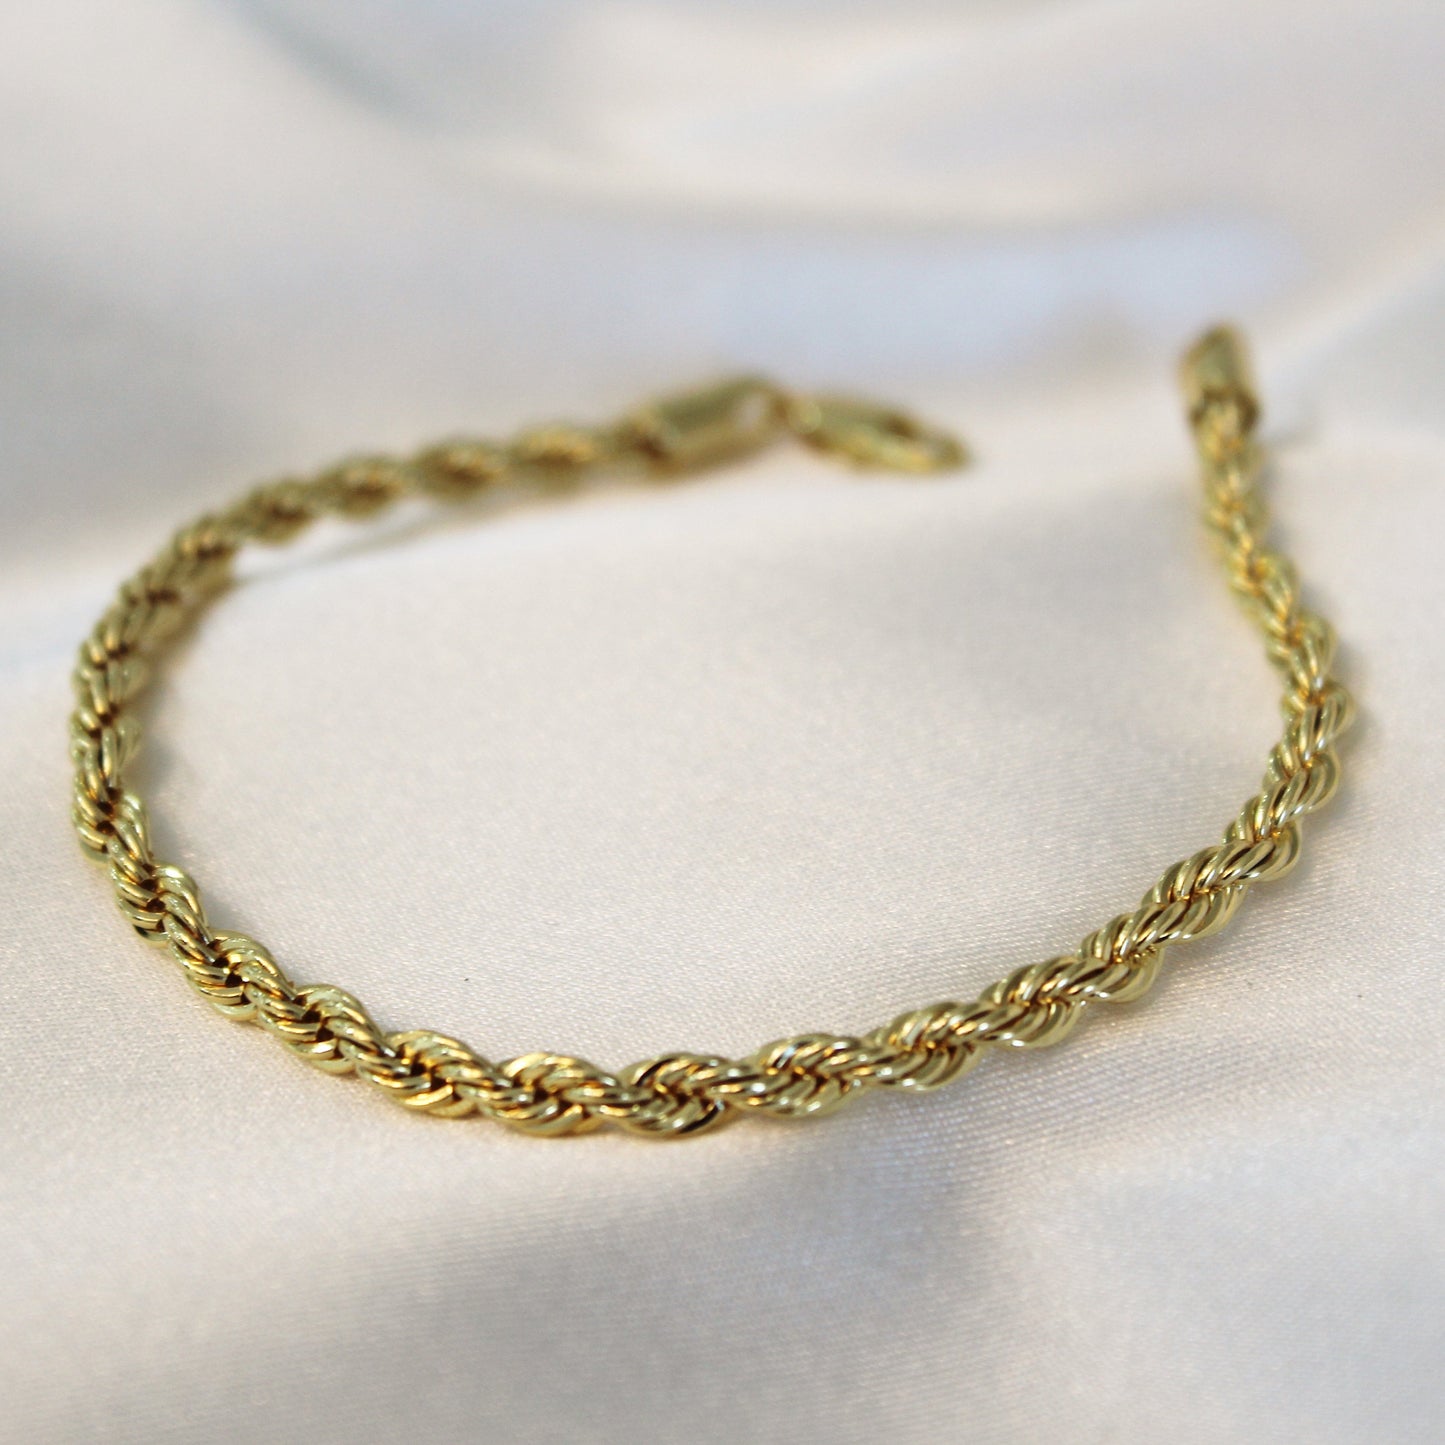 Twisted gold bracelet